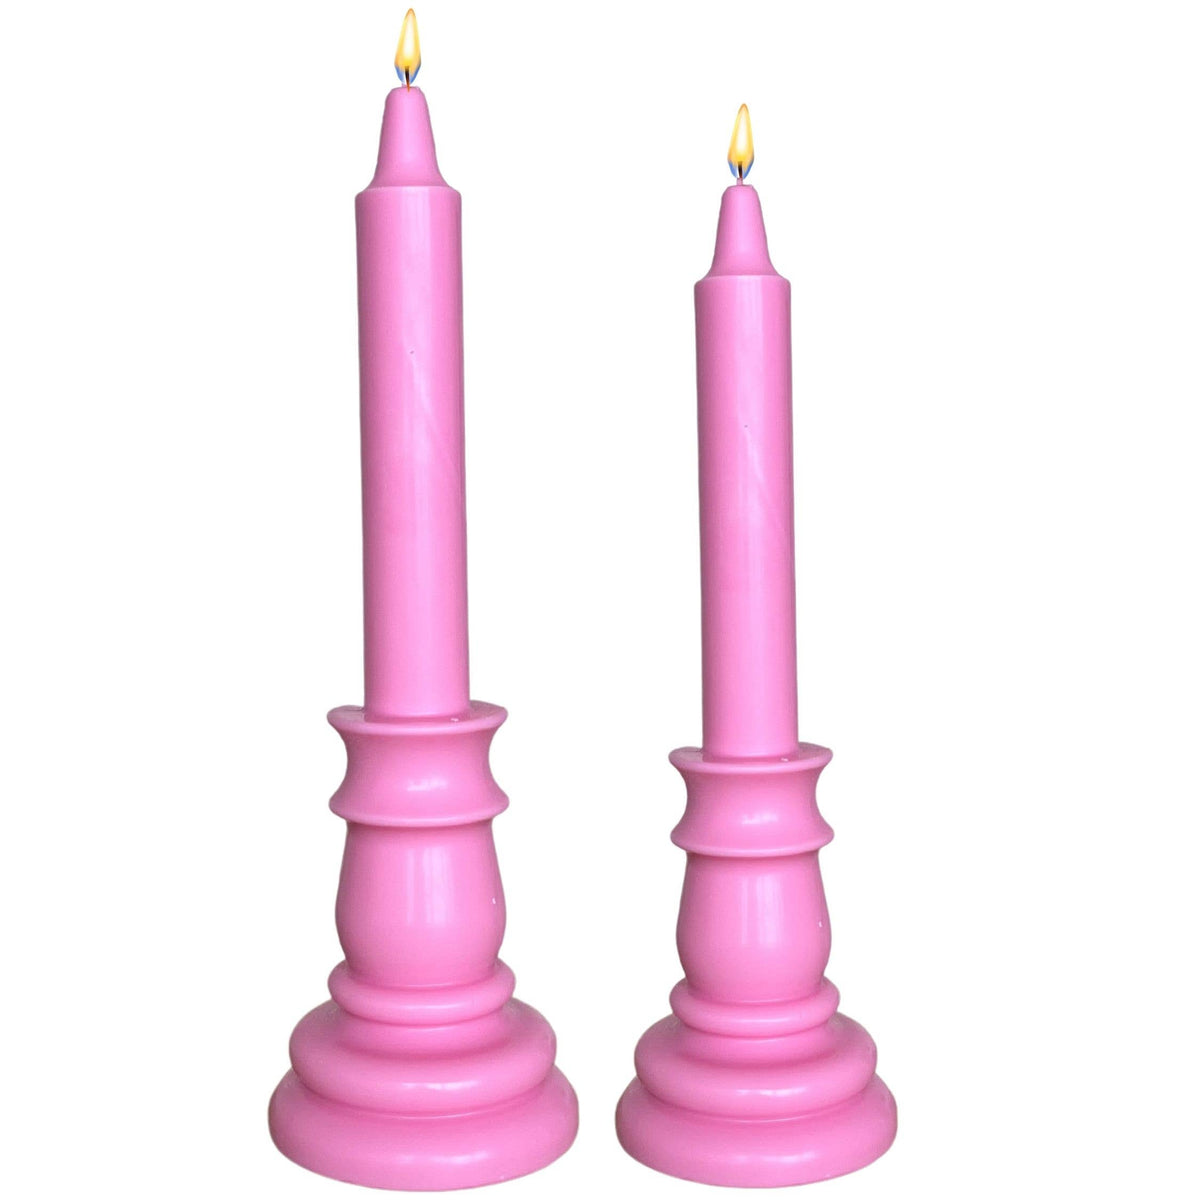 Candela Candles - Rose Pink | NÉOS CANDLESTUDIO